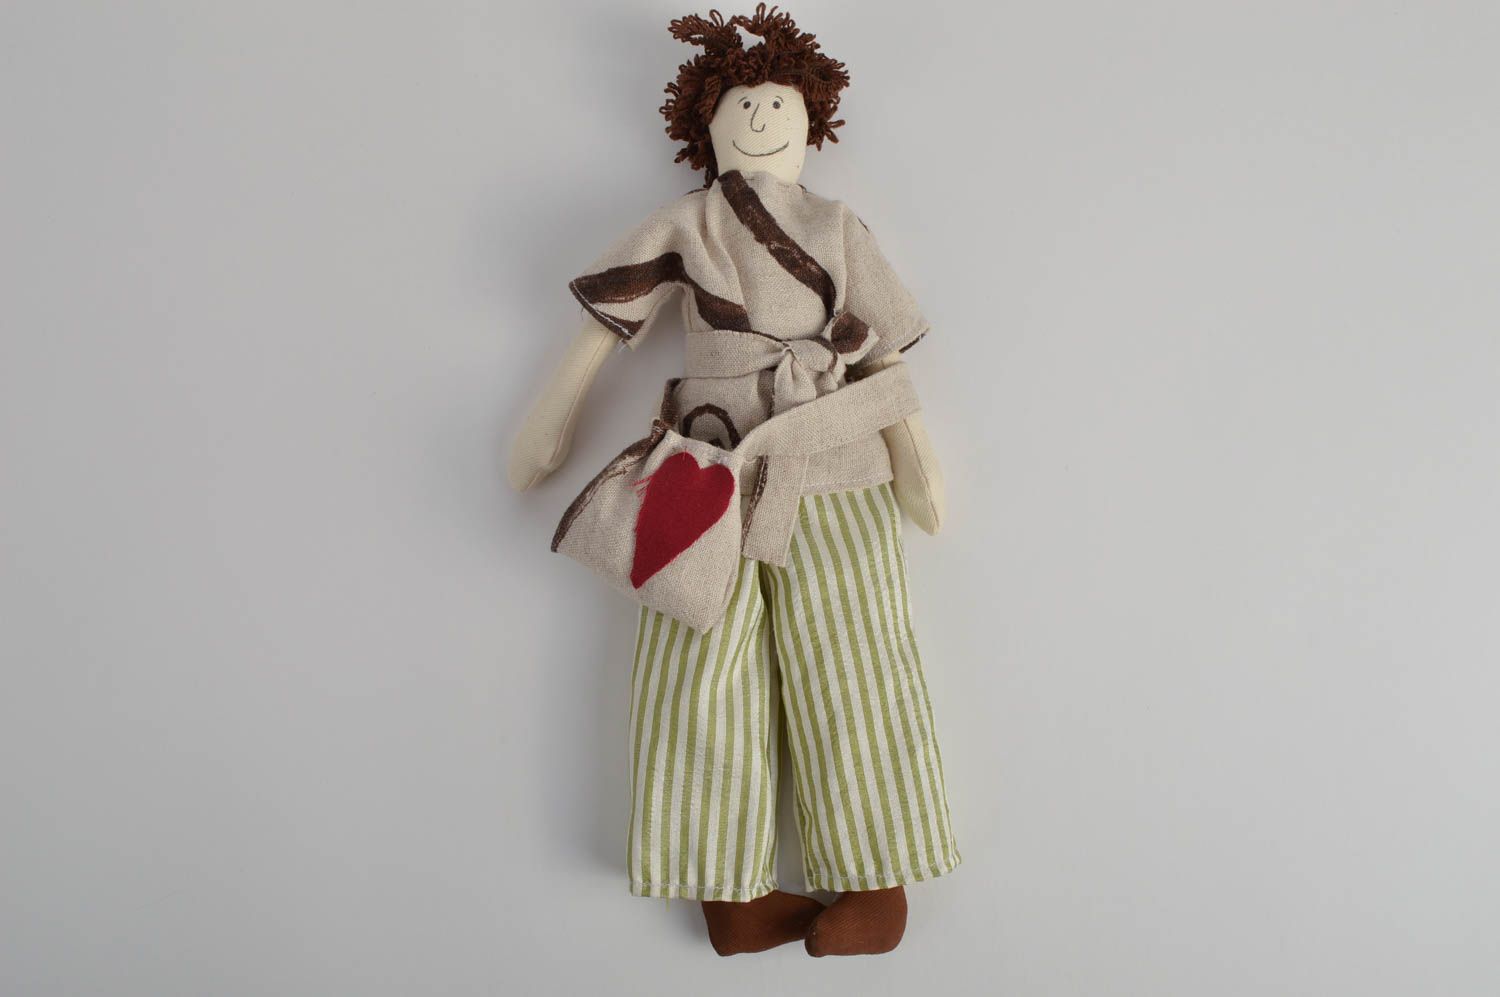 Handmade designer fabric soft doll for kids and interior decor boy with bag photo 2